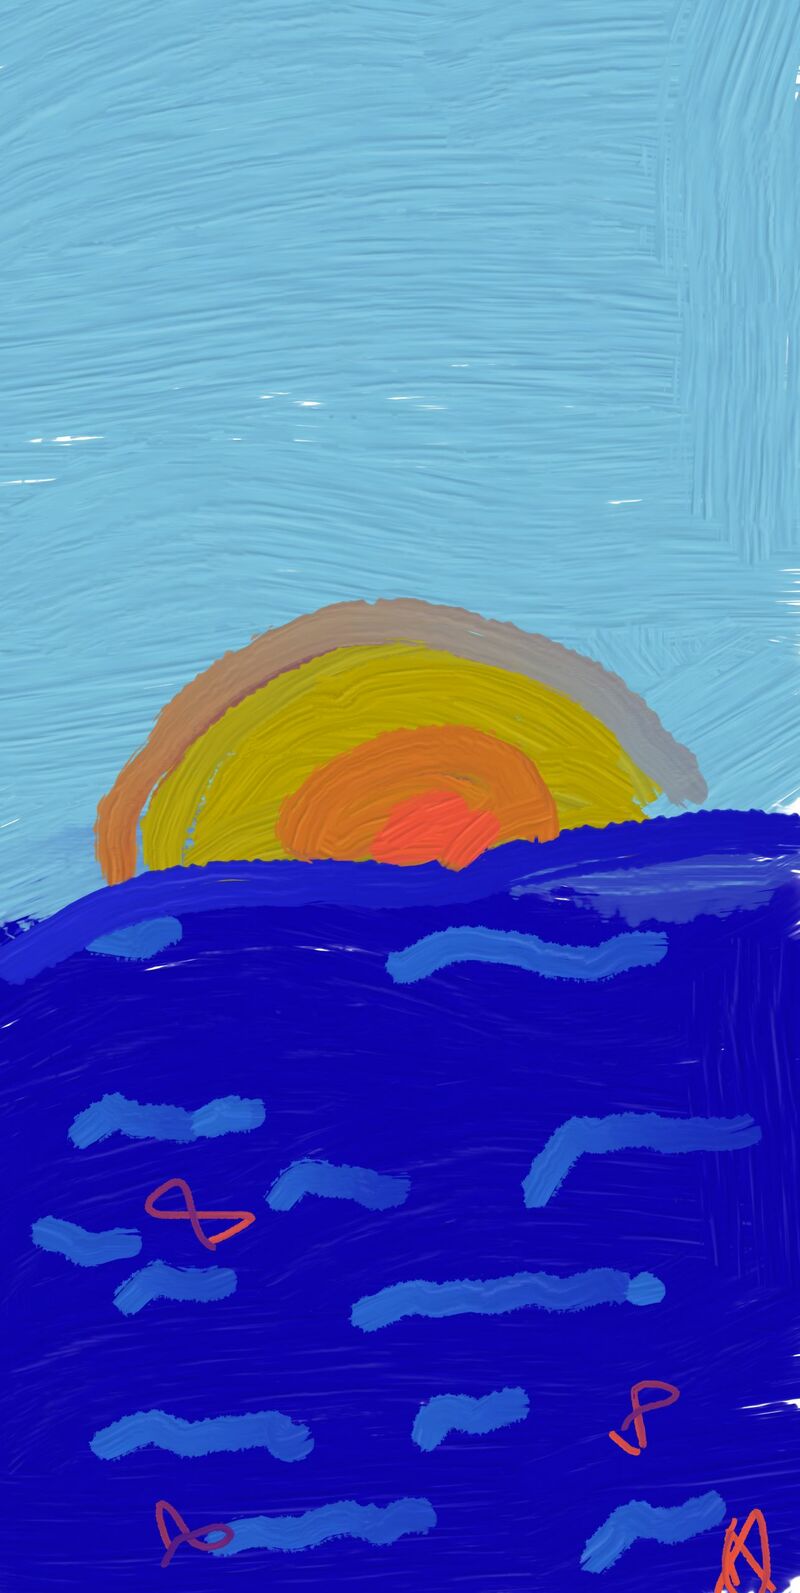 Sea and Sun I - a Digital Art by NaJa